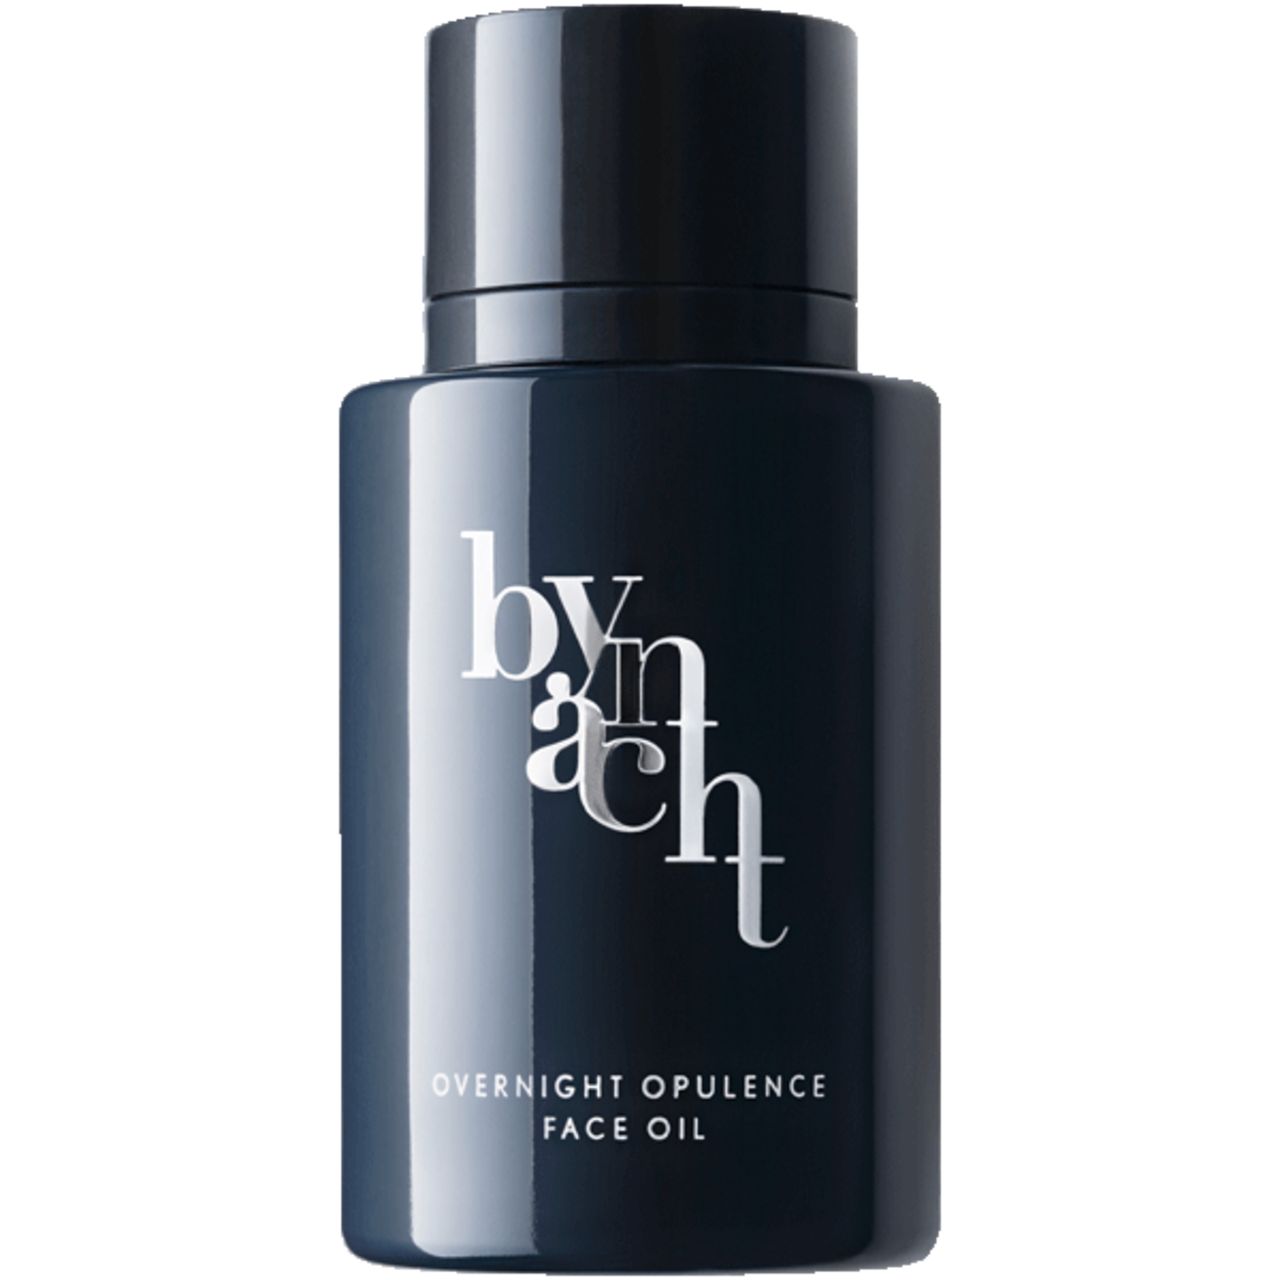 Bynacht, Overnight Opulence Face Oil